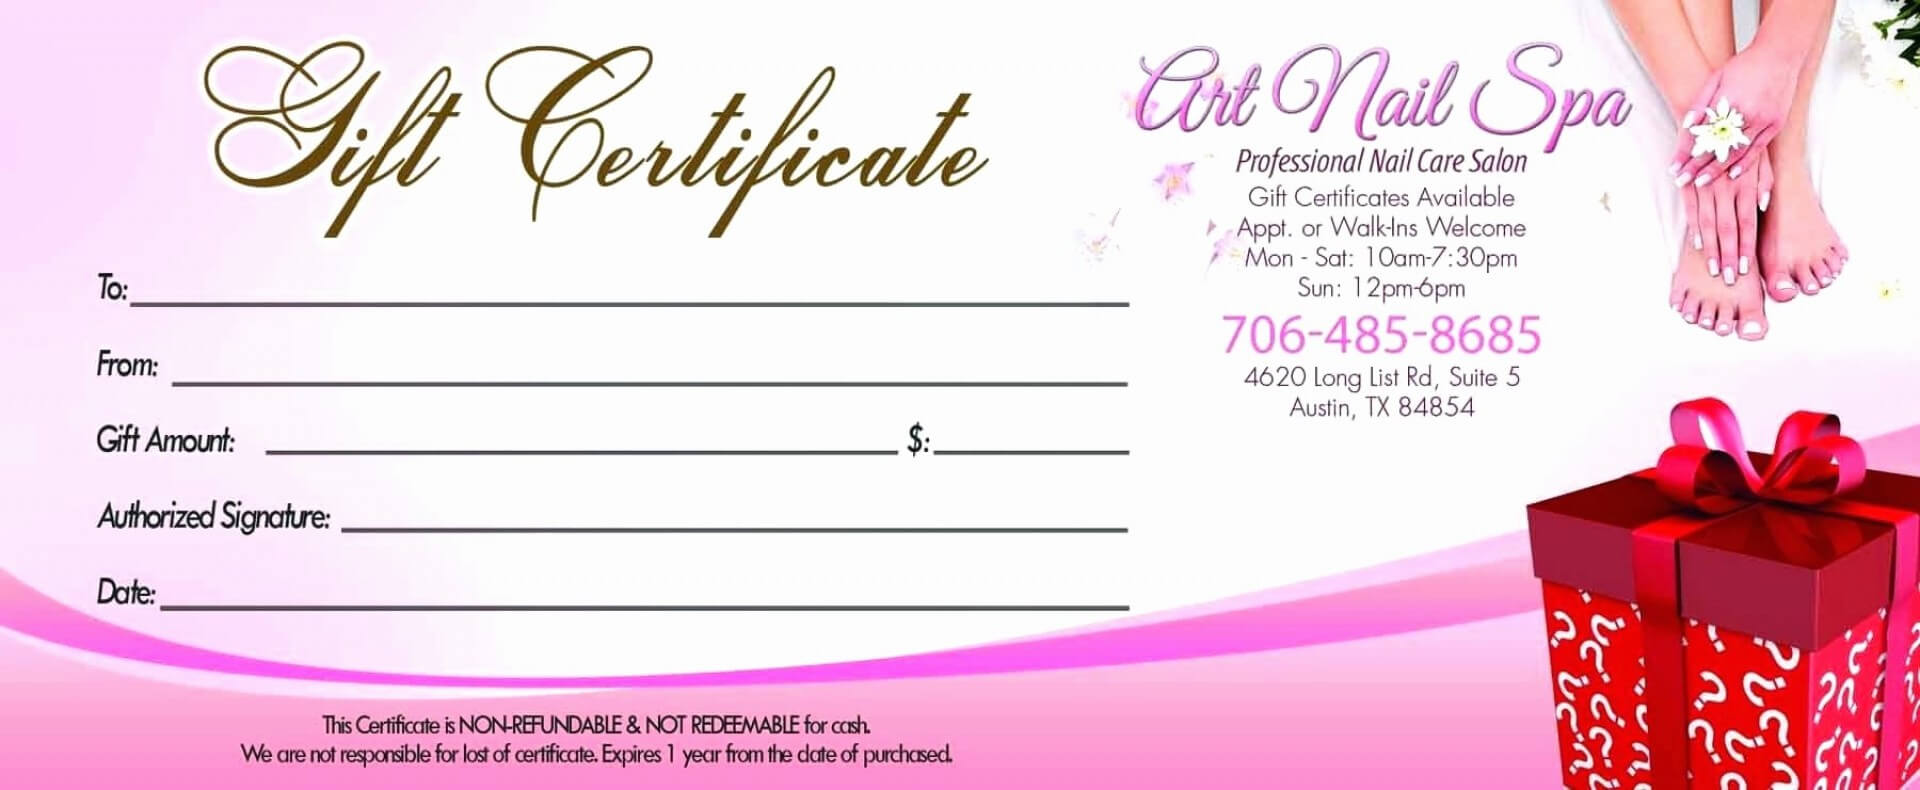 007 Template Ideas Salon Gift Certificates Templates Nail With Regard To Nail Gift Certificate Template Free